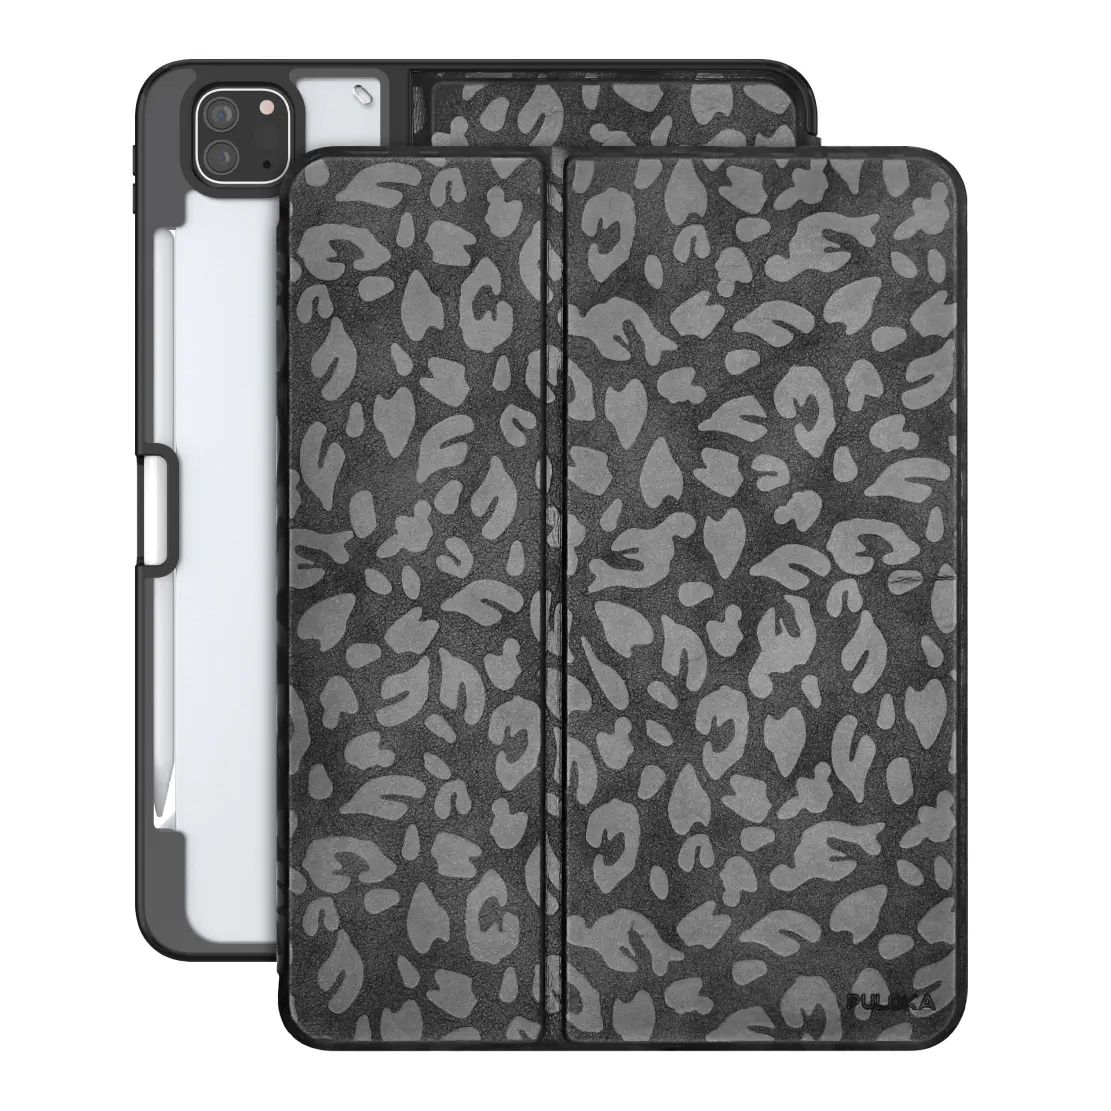 PULOKA customed iPad Cover leopardata in pelle microfibra con portamatite Auto Sleep/Wake per iPad 9th 8th 10th